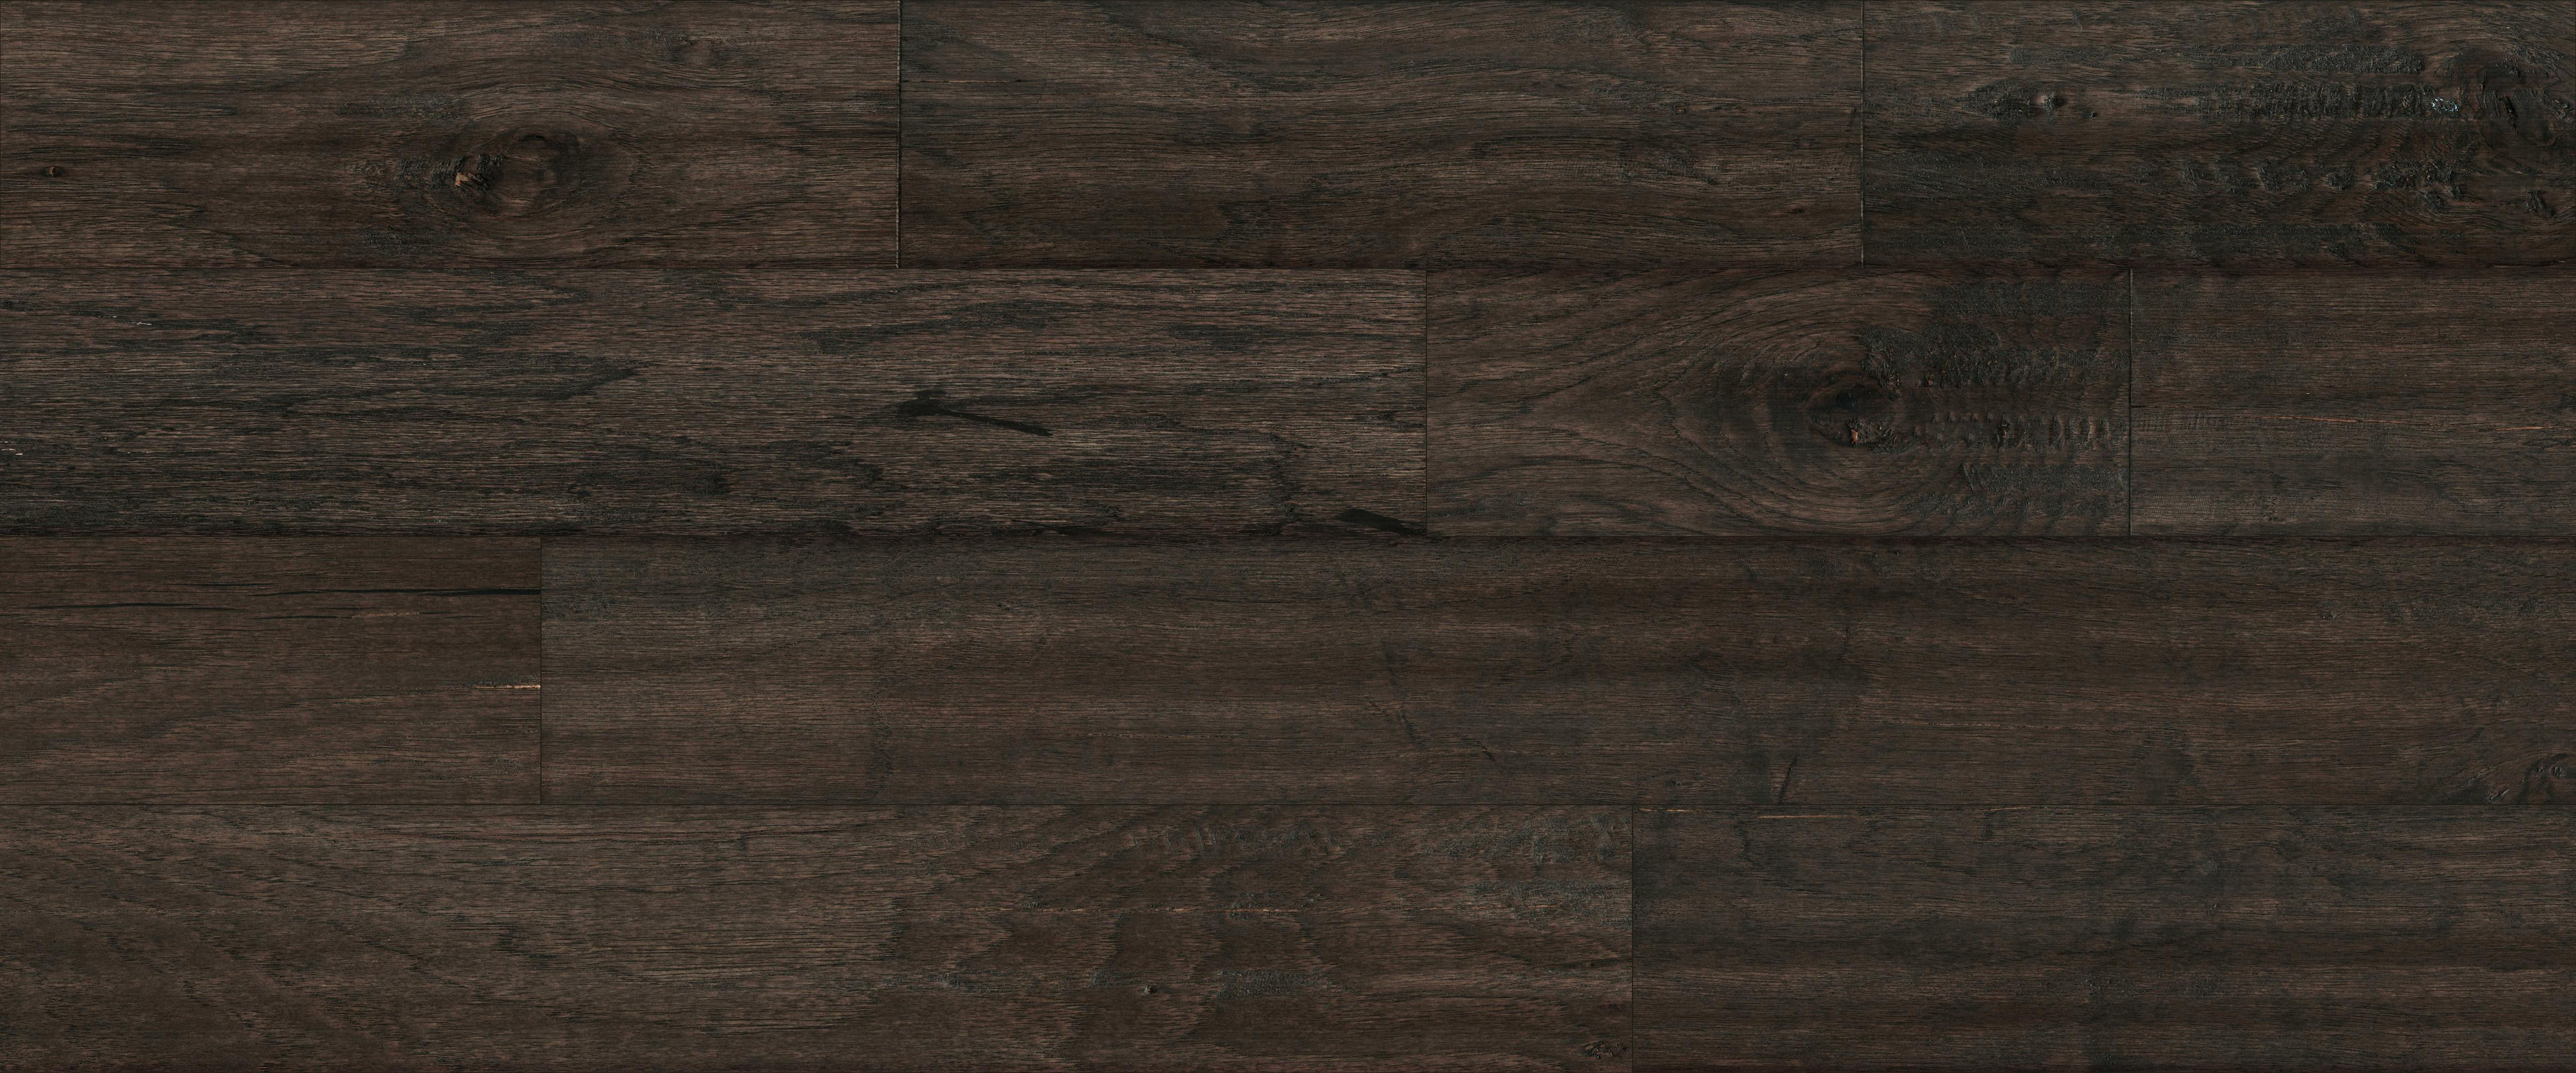 24 Perfect 3 8 Inch Hardwood Flooring 2024 free download 3 8 inch hardwood flooring of mullican lincolnshire sculpted hickory granite 5 engineered with mullican lincolnshire sculpted hickory granite 5 engineered hardwood flooring